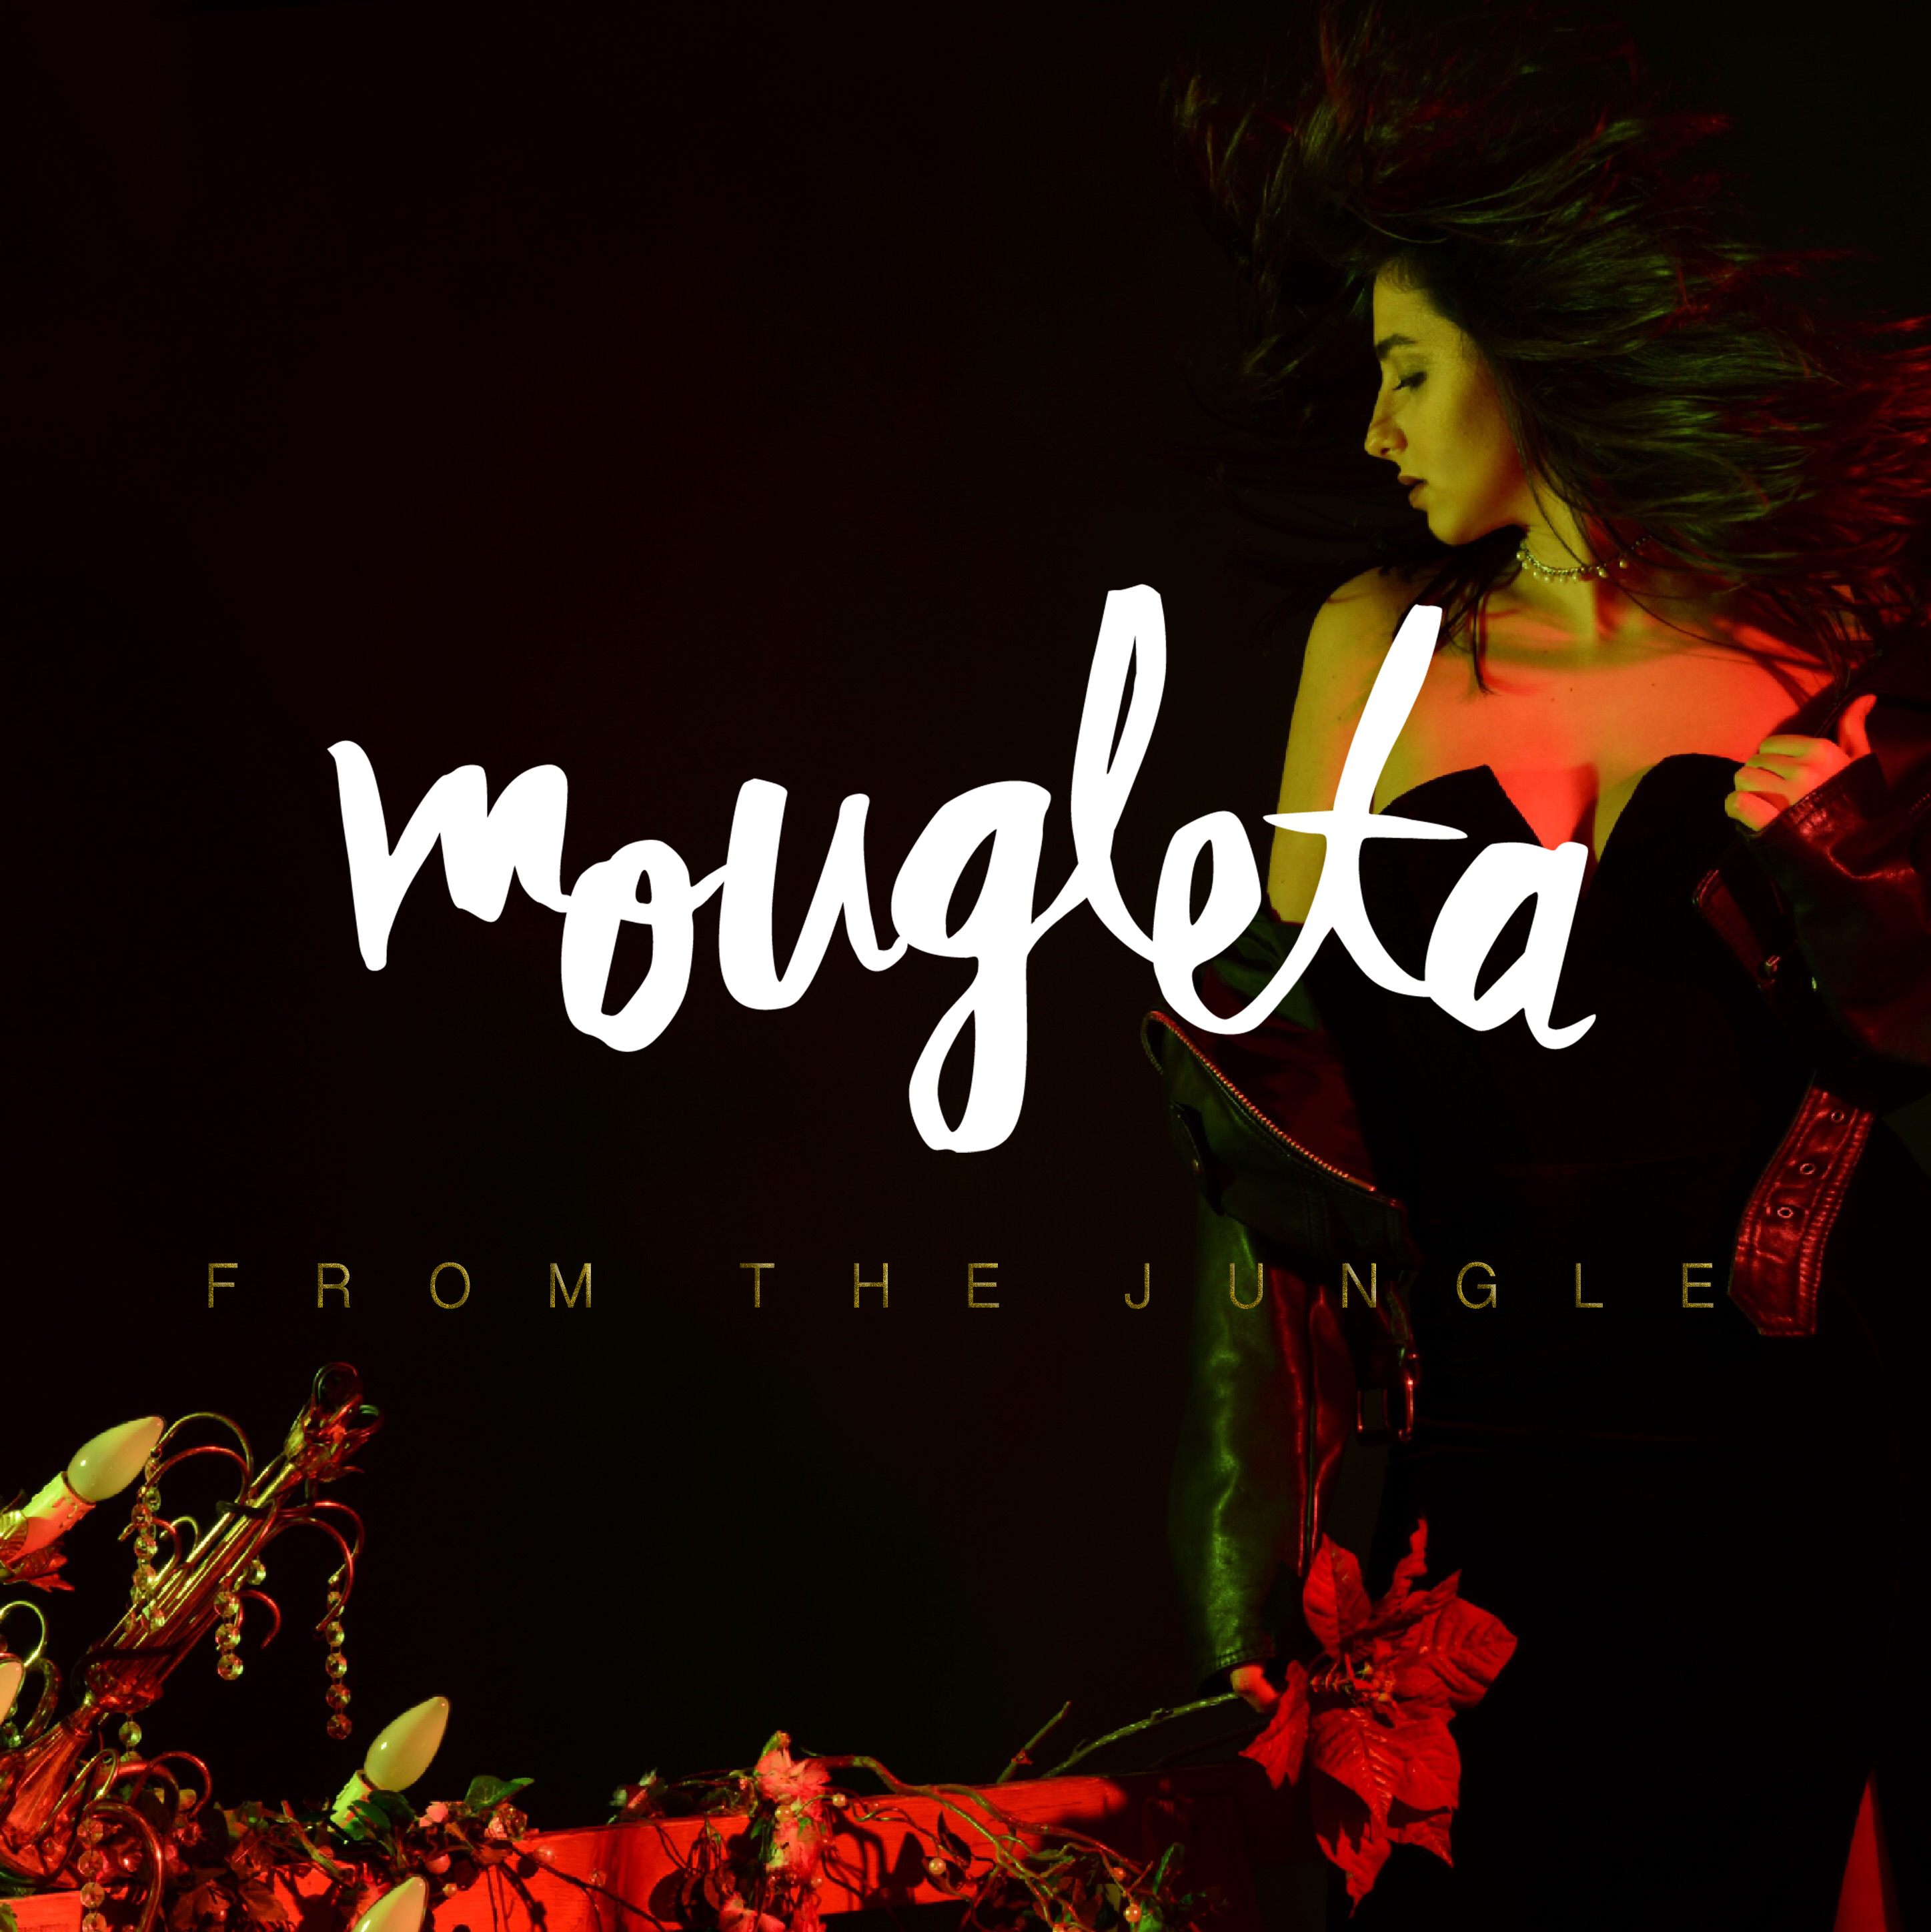 Mougleta — Clown cover artwork